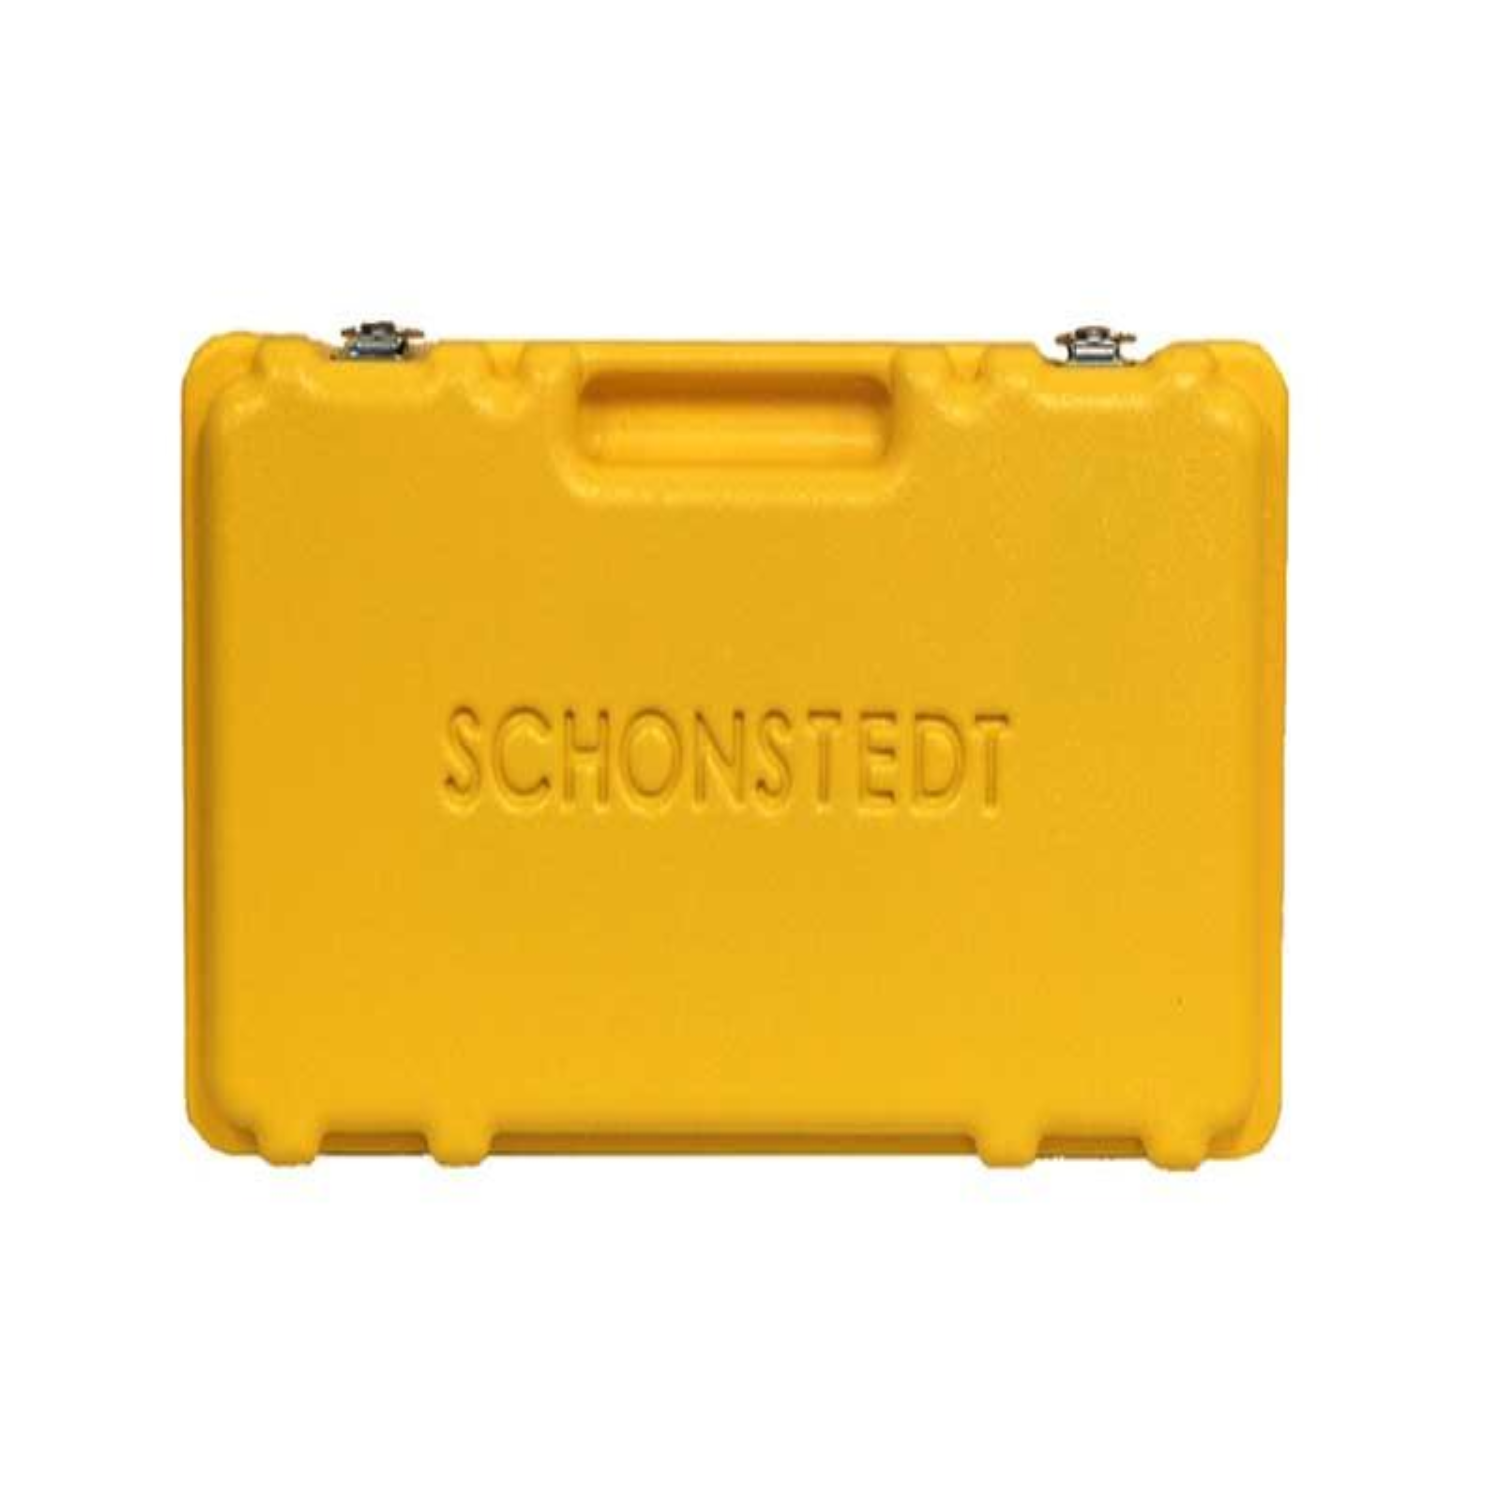 Schonstedt® Hard Carrying Case